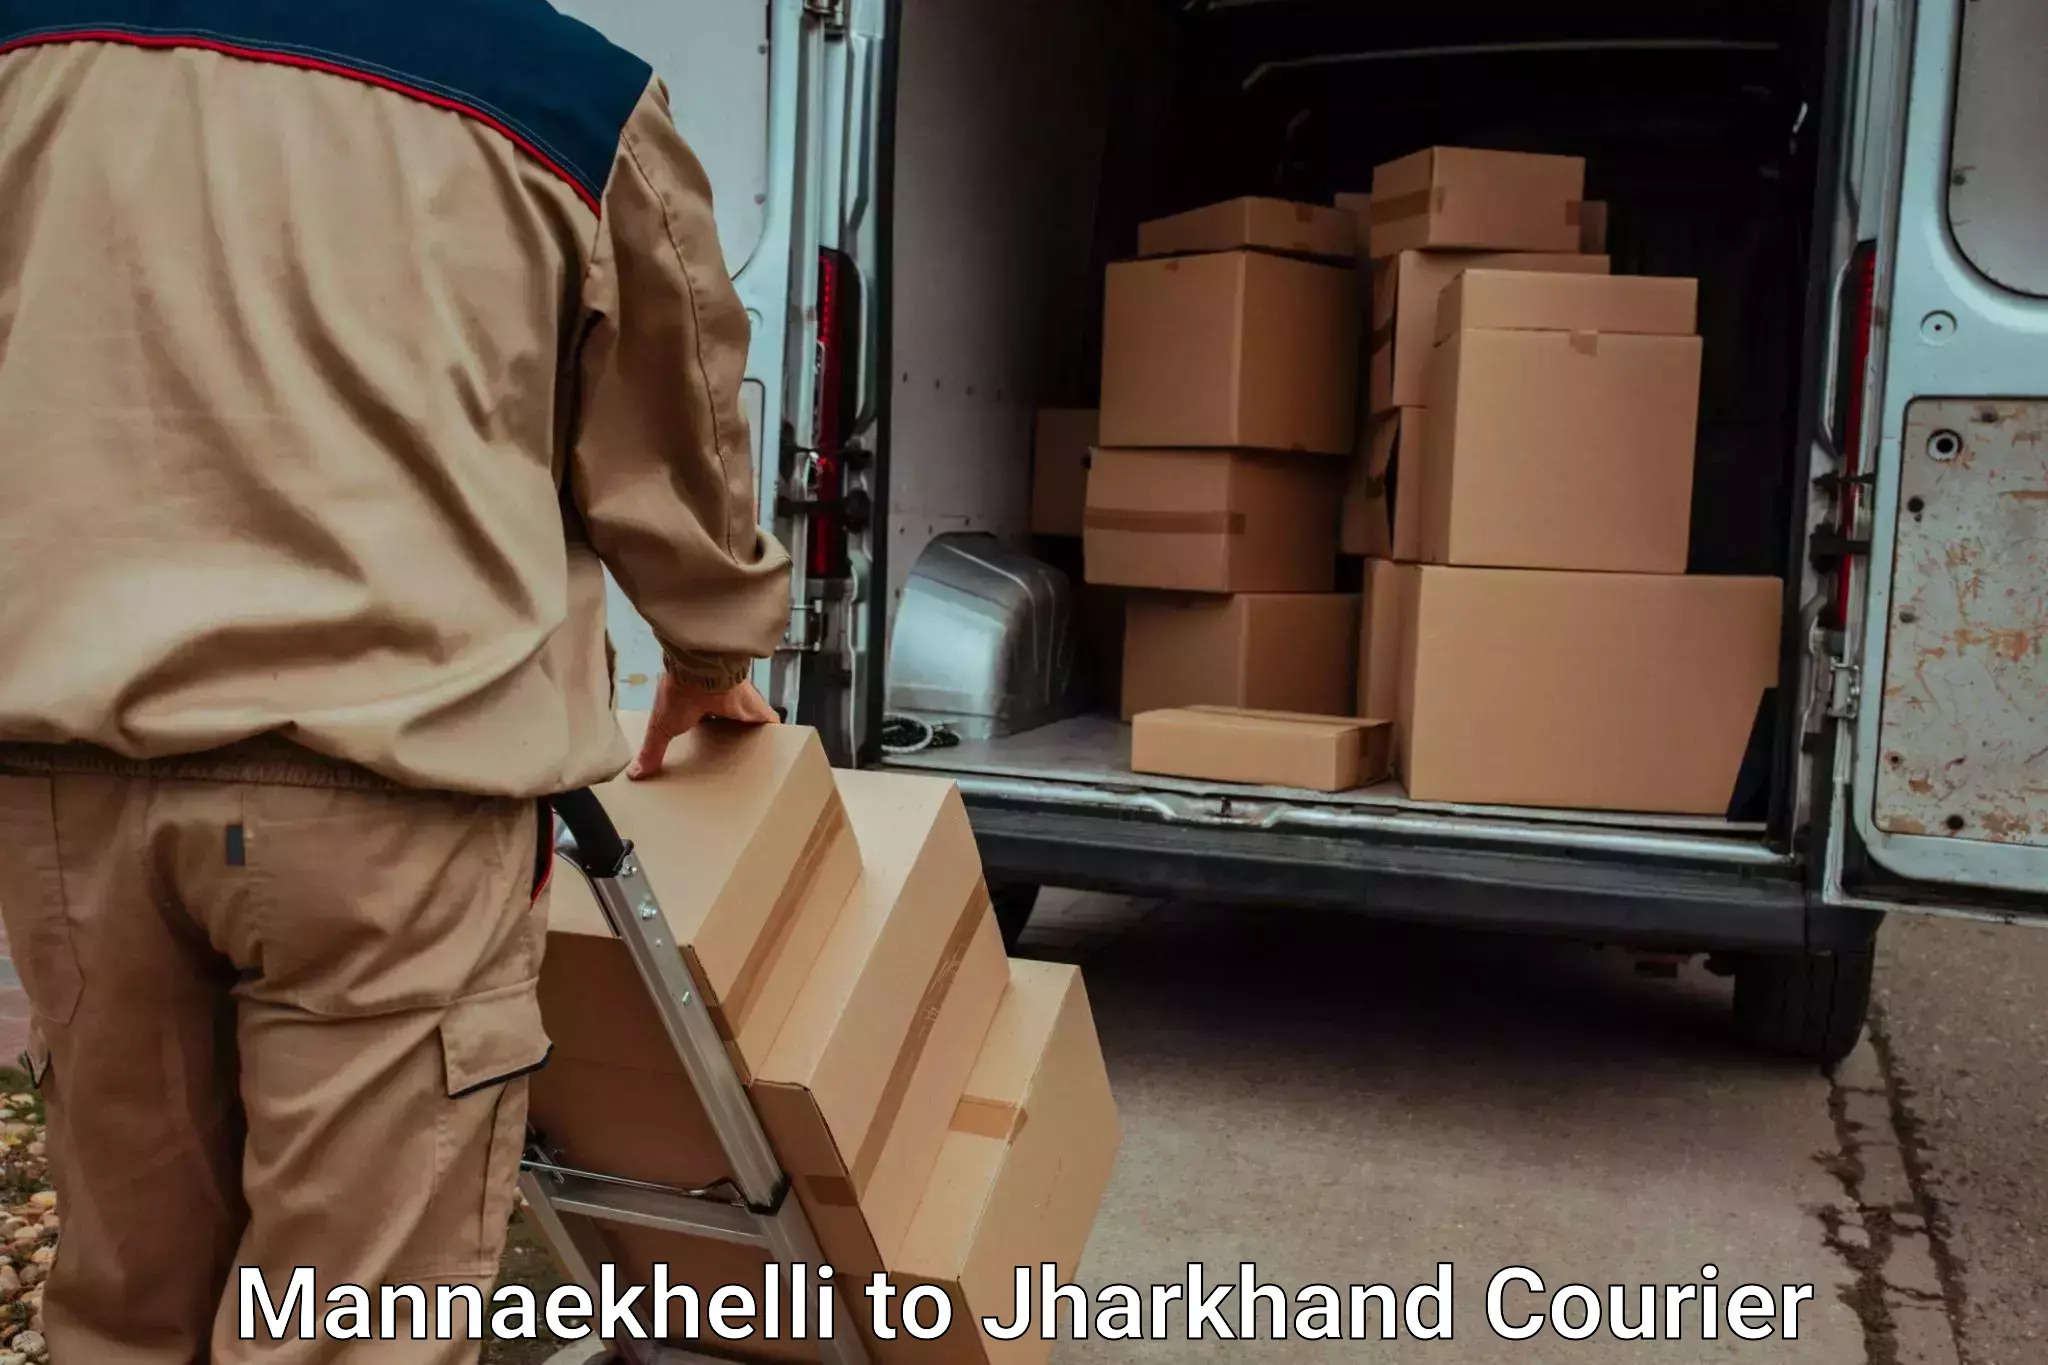 Baggage shipping advice Mannaekhelli to Peterbar